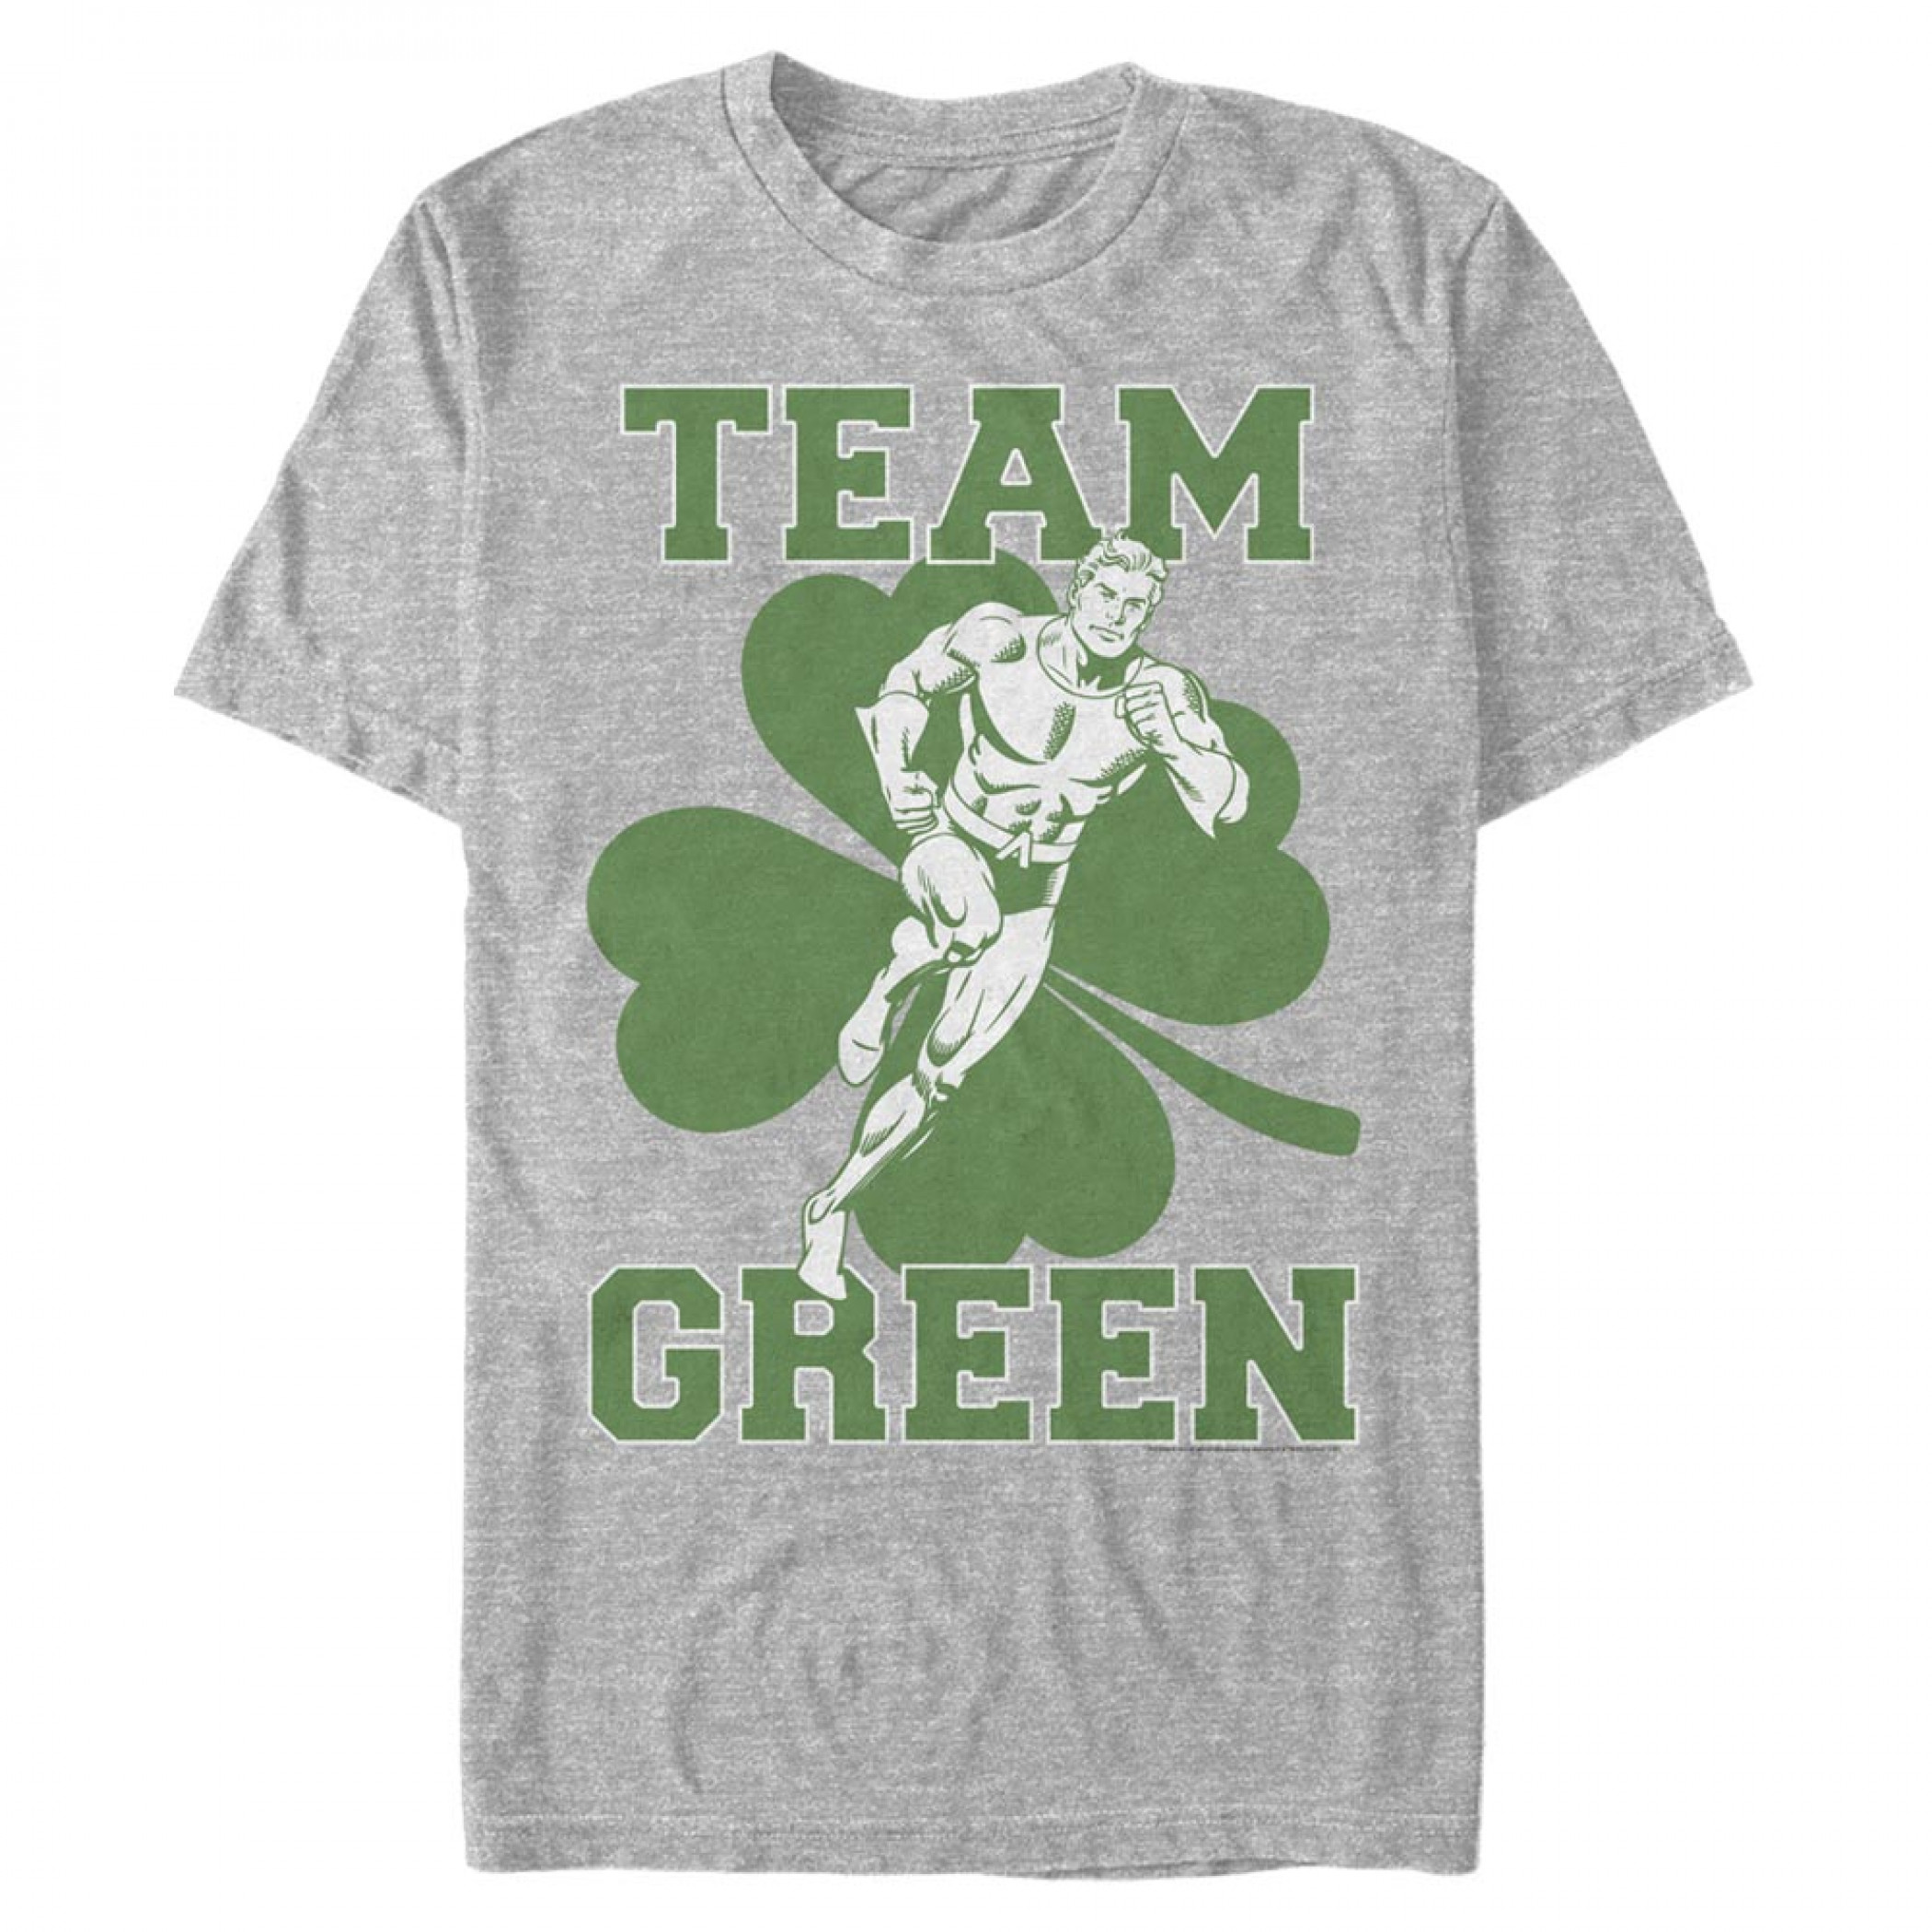 Aquaman Team Green St. Patrick's Day T-Shirt